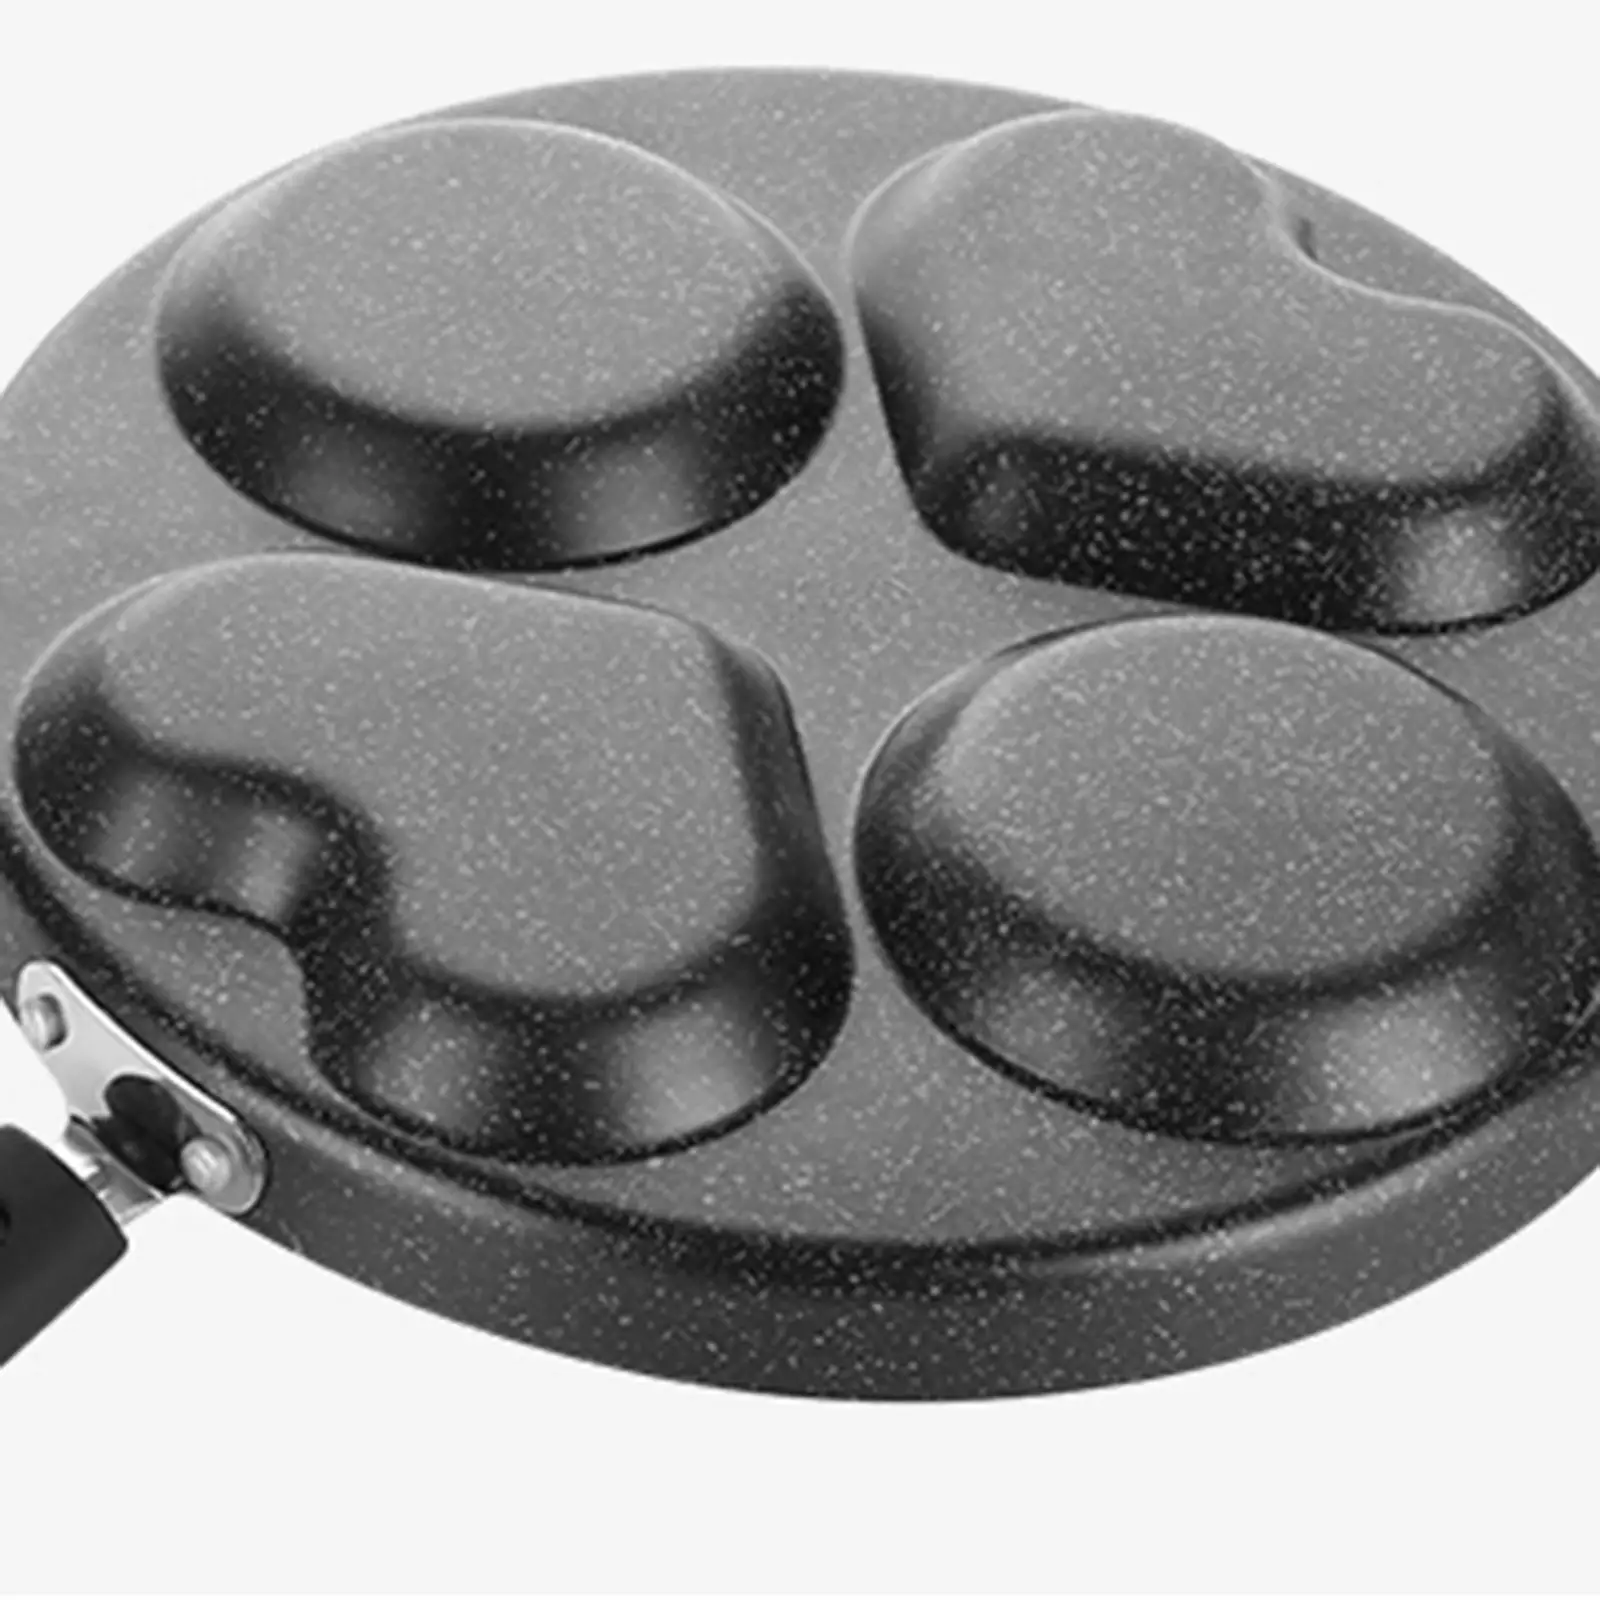 4 Hole Egg Frying Pan Non Stick Aluminum Alloy Medical Stone Coating Pancake Maker for Hotel Restaurants Kitchen Household